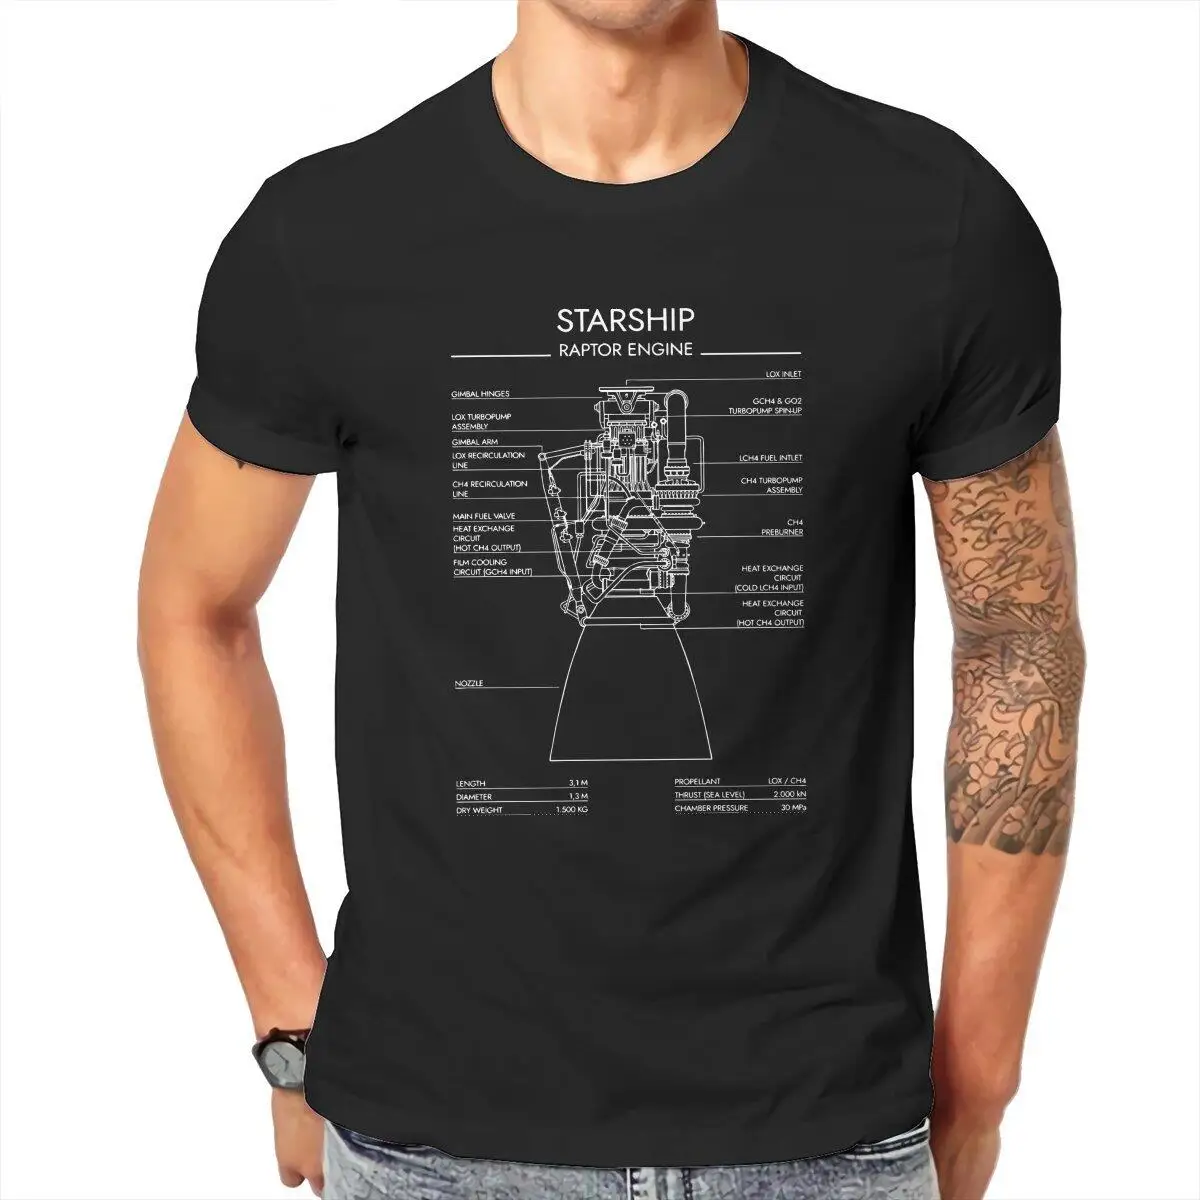 Starship Blueprint Falcon Heavy Rocket T-Shirts for Men SpaceX Space X Elon Musk 100% Cotton Tee Shirt T Shirt Graphic Clothing